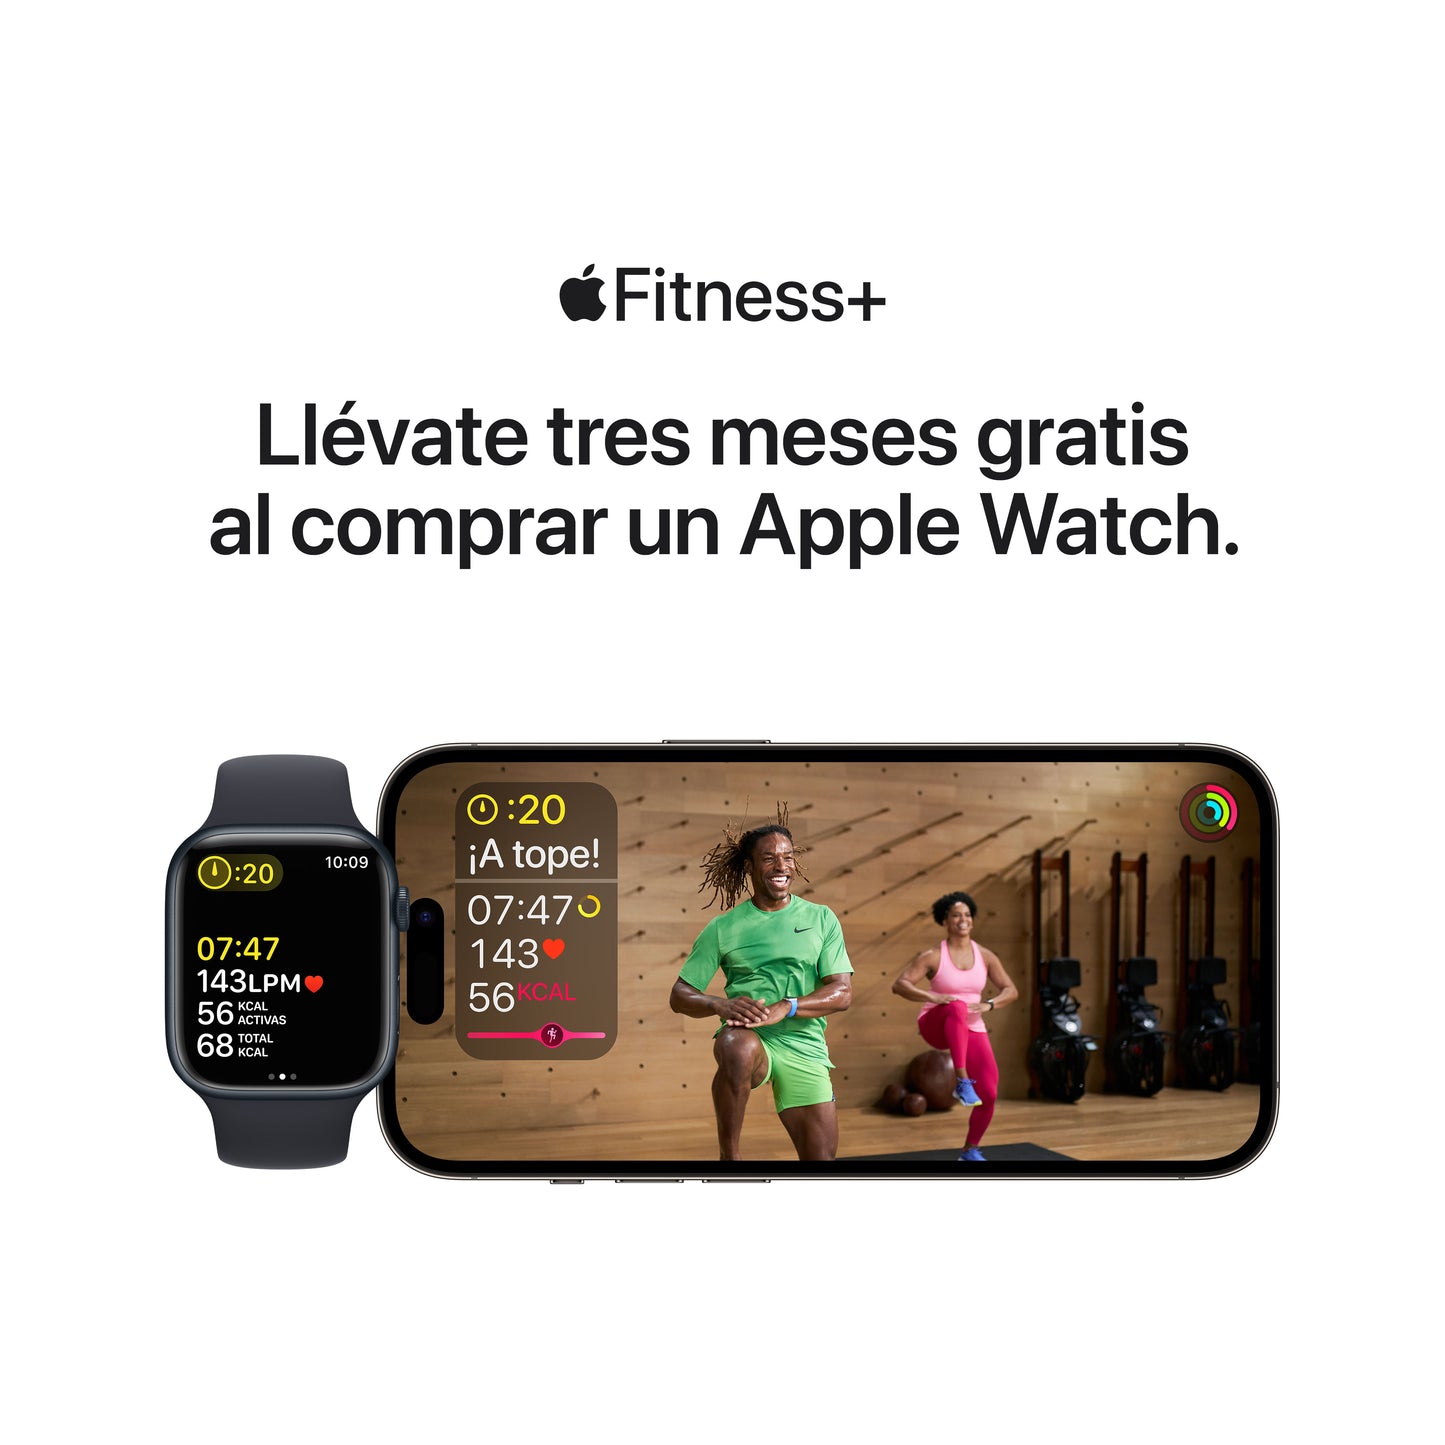 Apple Watch SE 2 generación (GPS) Fitness+ llevate tres meses gratis en www.mac-center.com